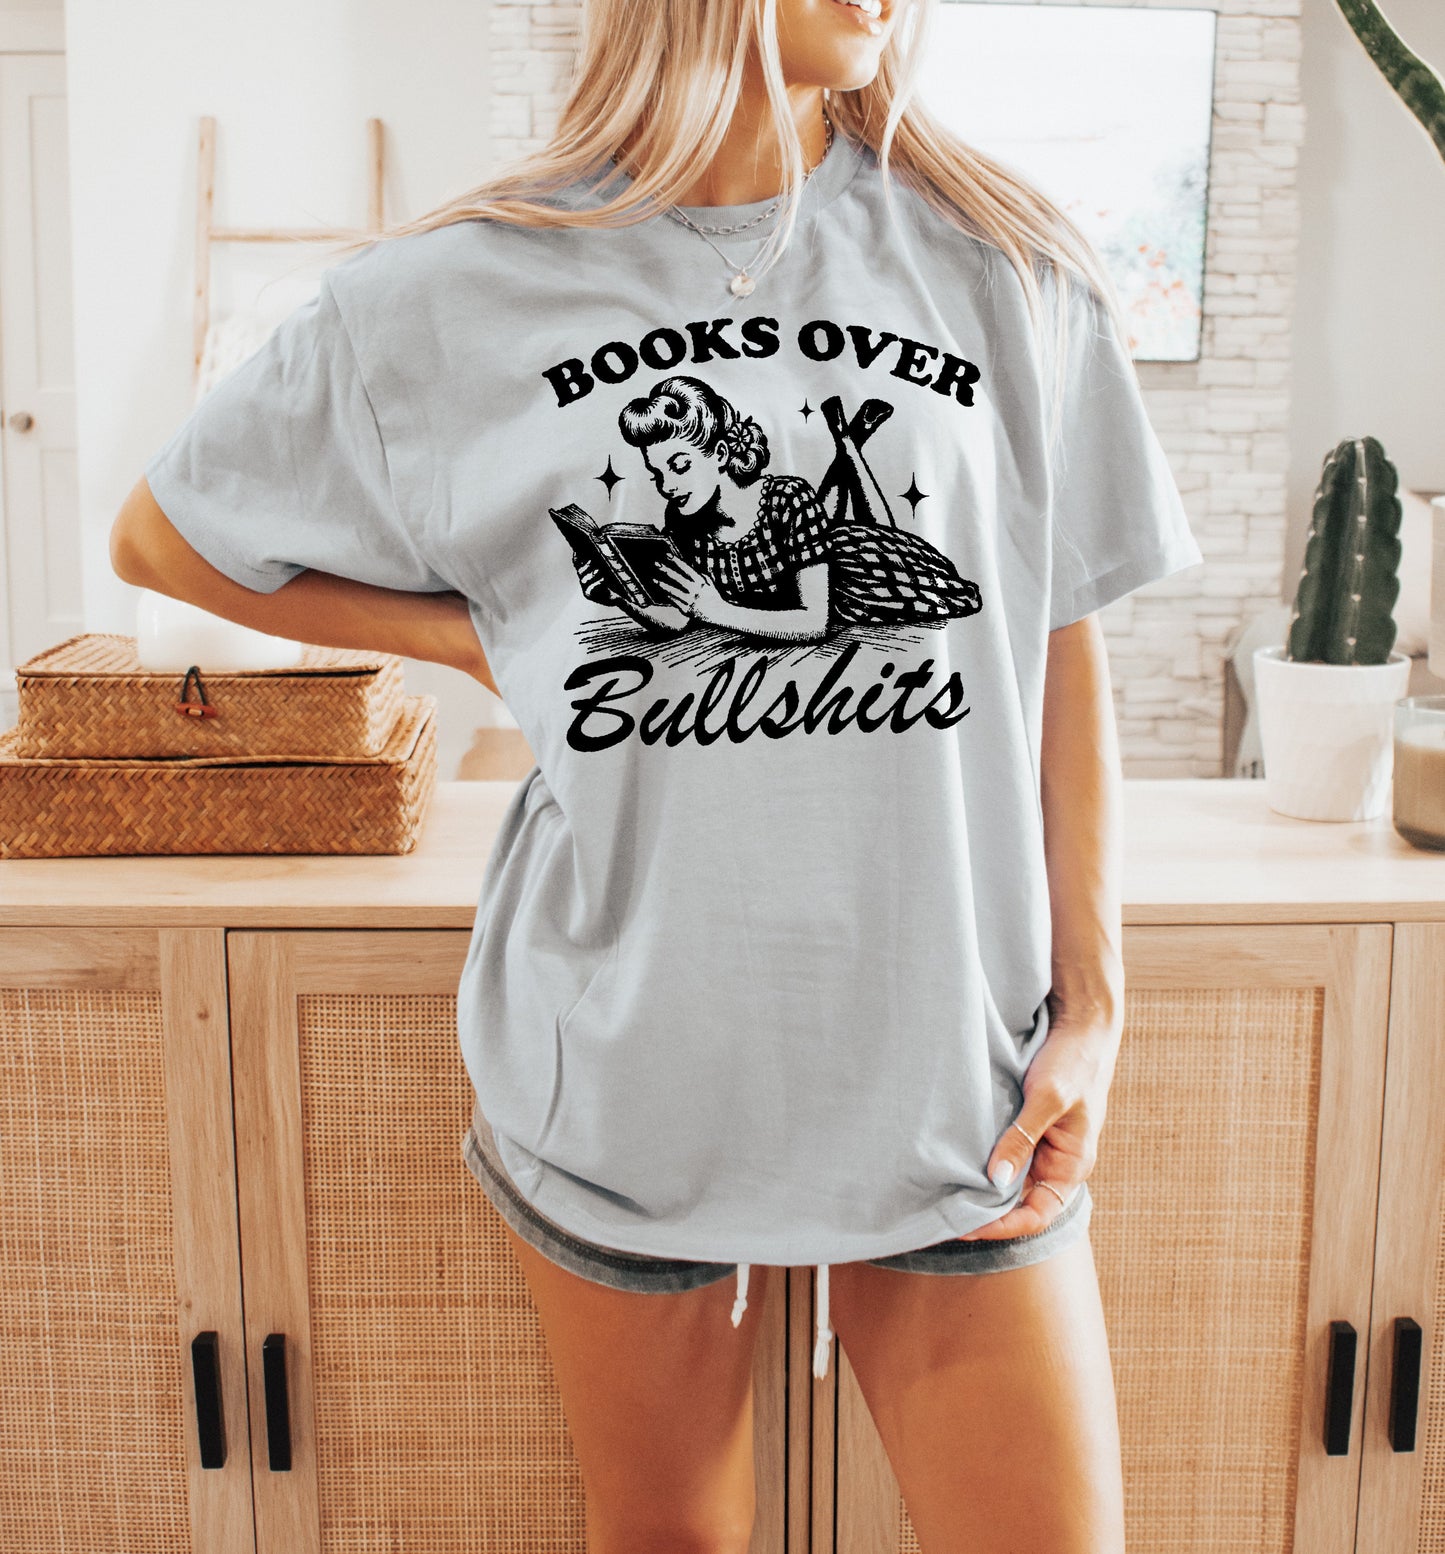 Books Over Bullshits Shirt Book shirt Book Lover TShirt women Reading Shirts Book Club Shirt book shirt for women reading shirt Book gift